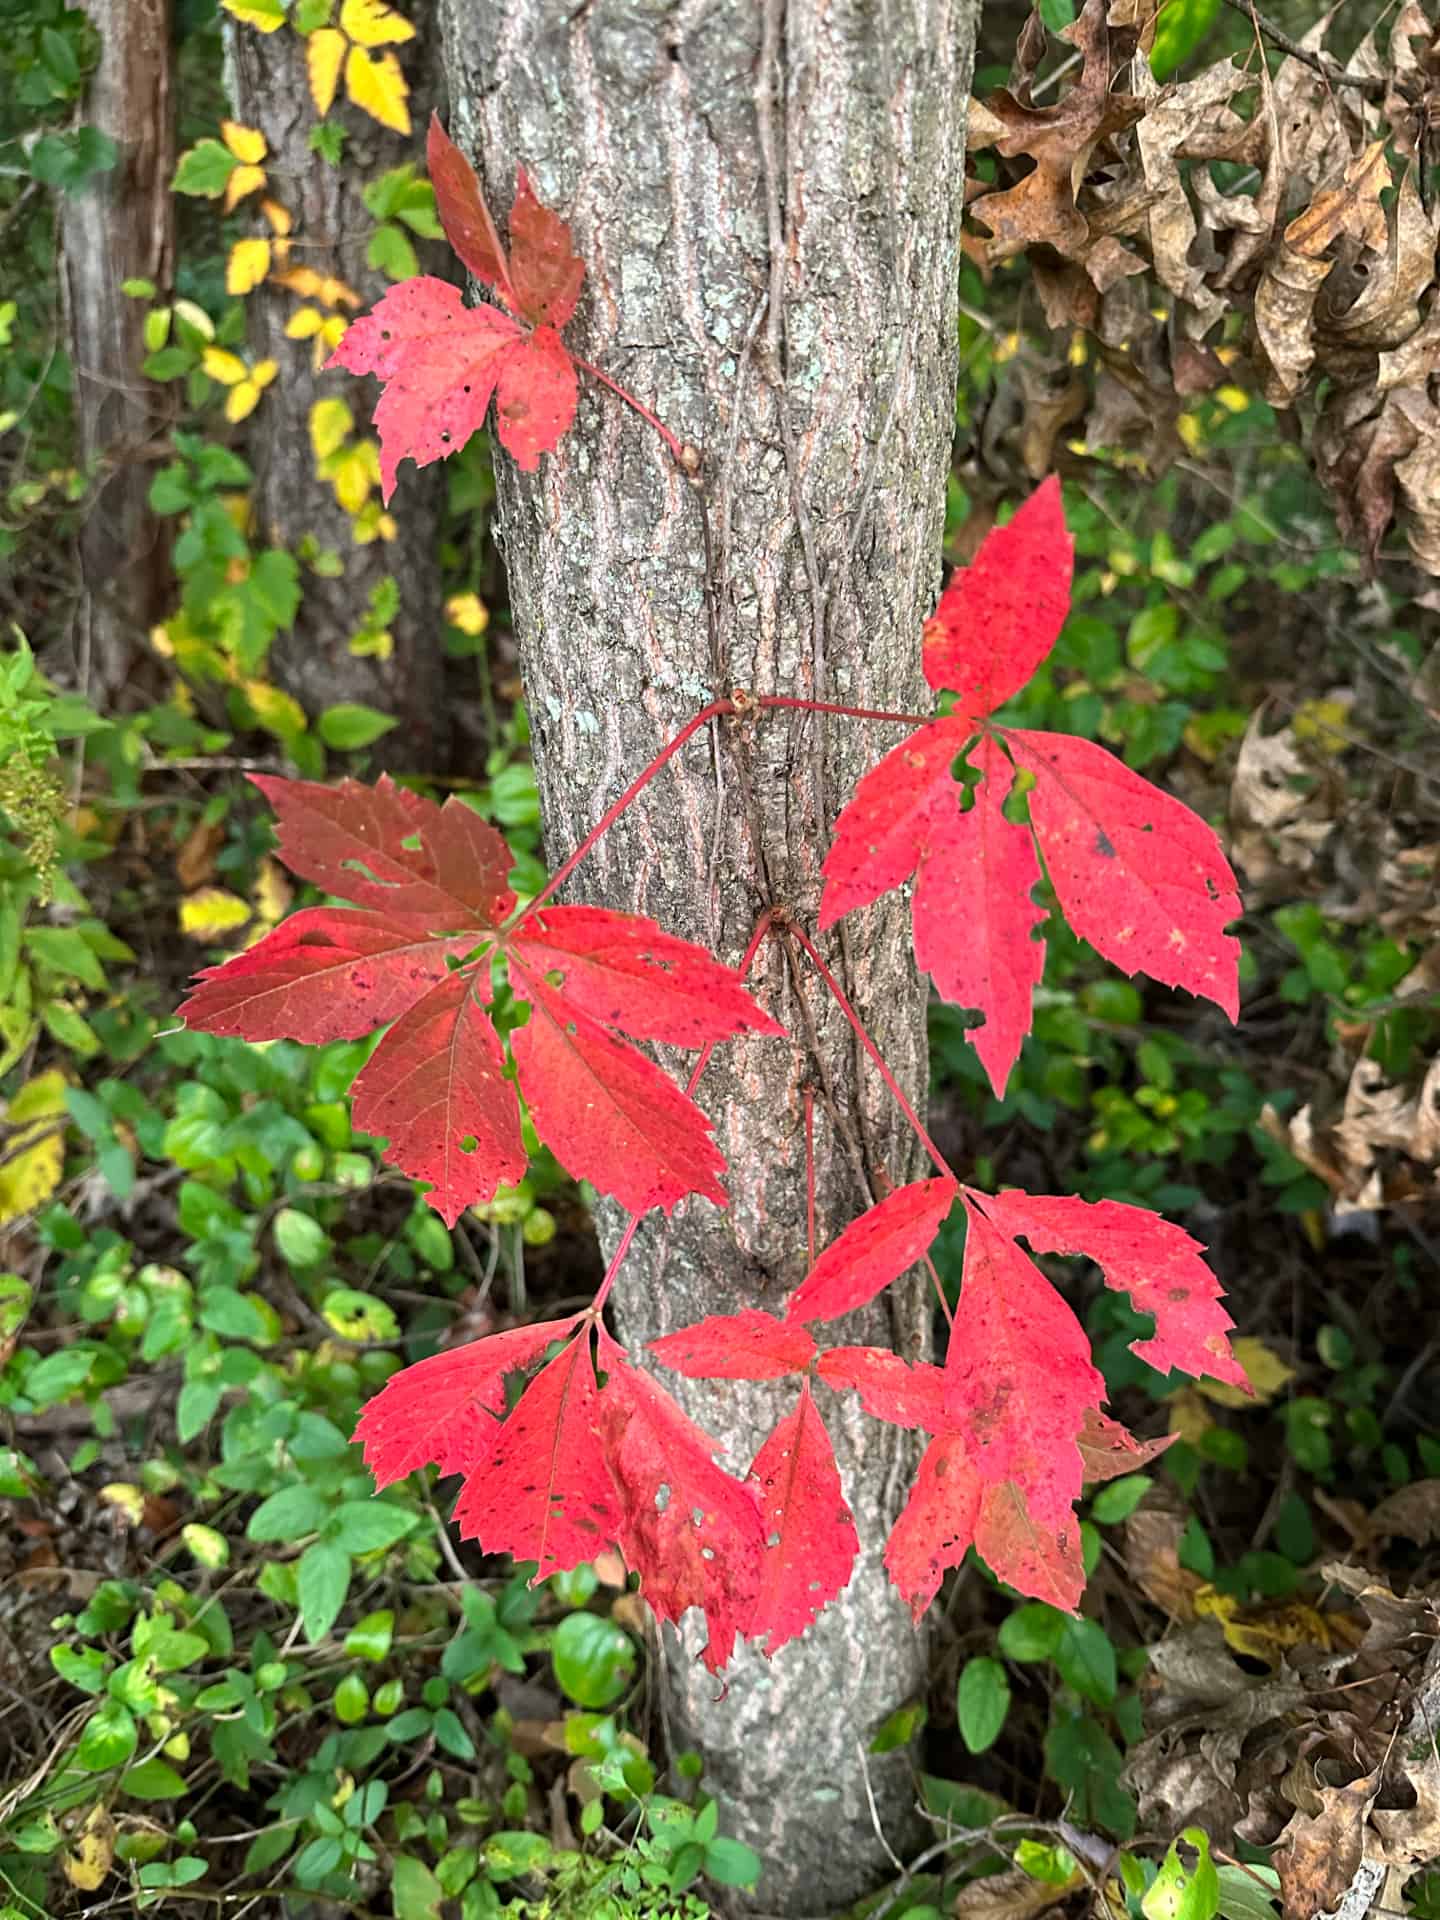 Virginia creeper leaves in full scarlet fall color